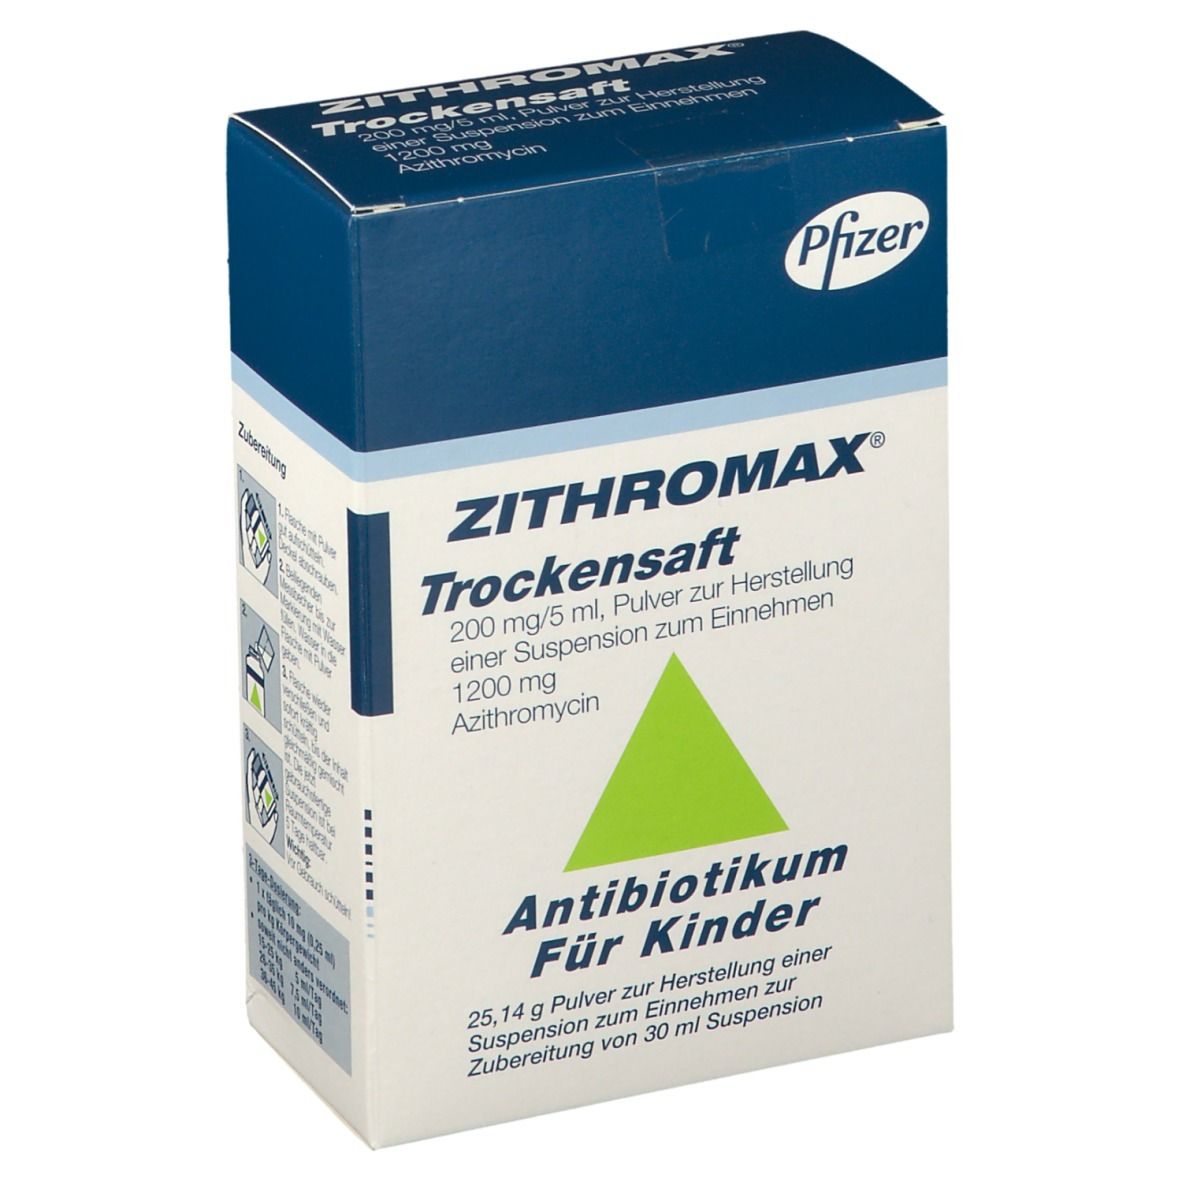 ZITHROMAX® Trockensaft 1200 mg Kinder